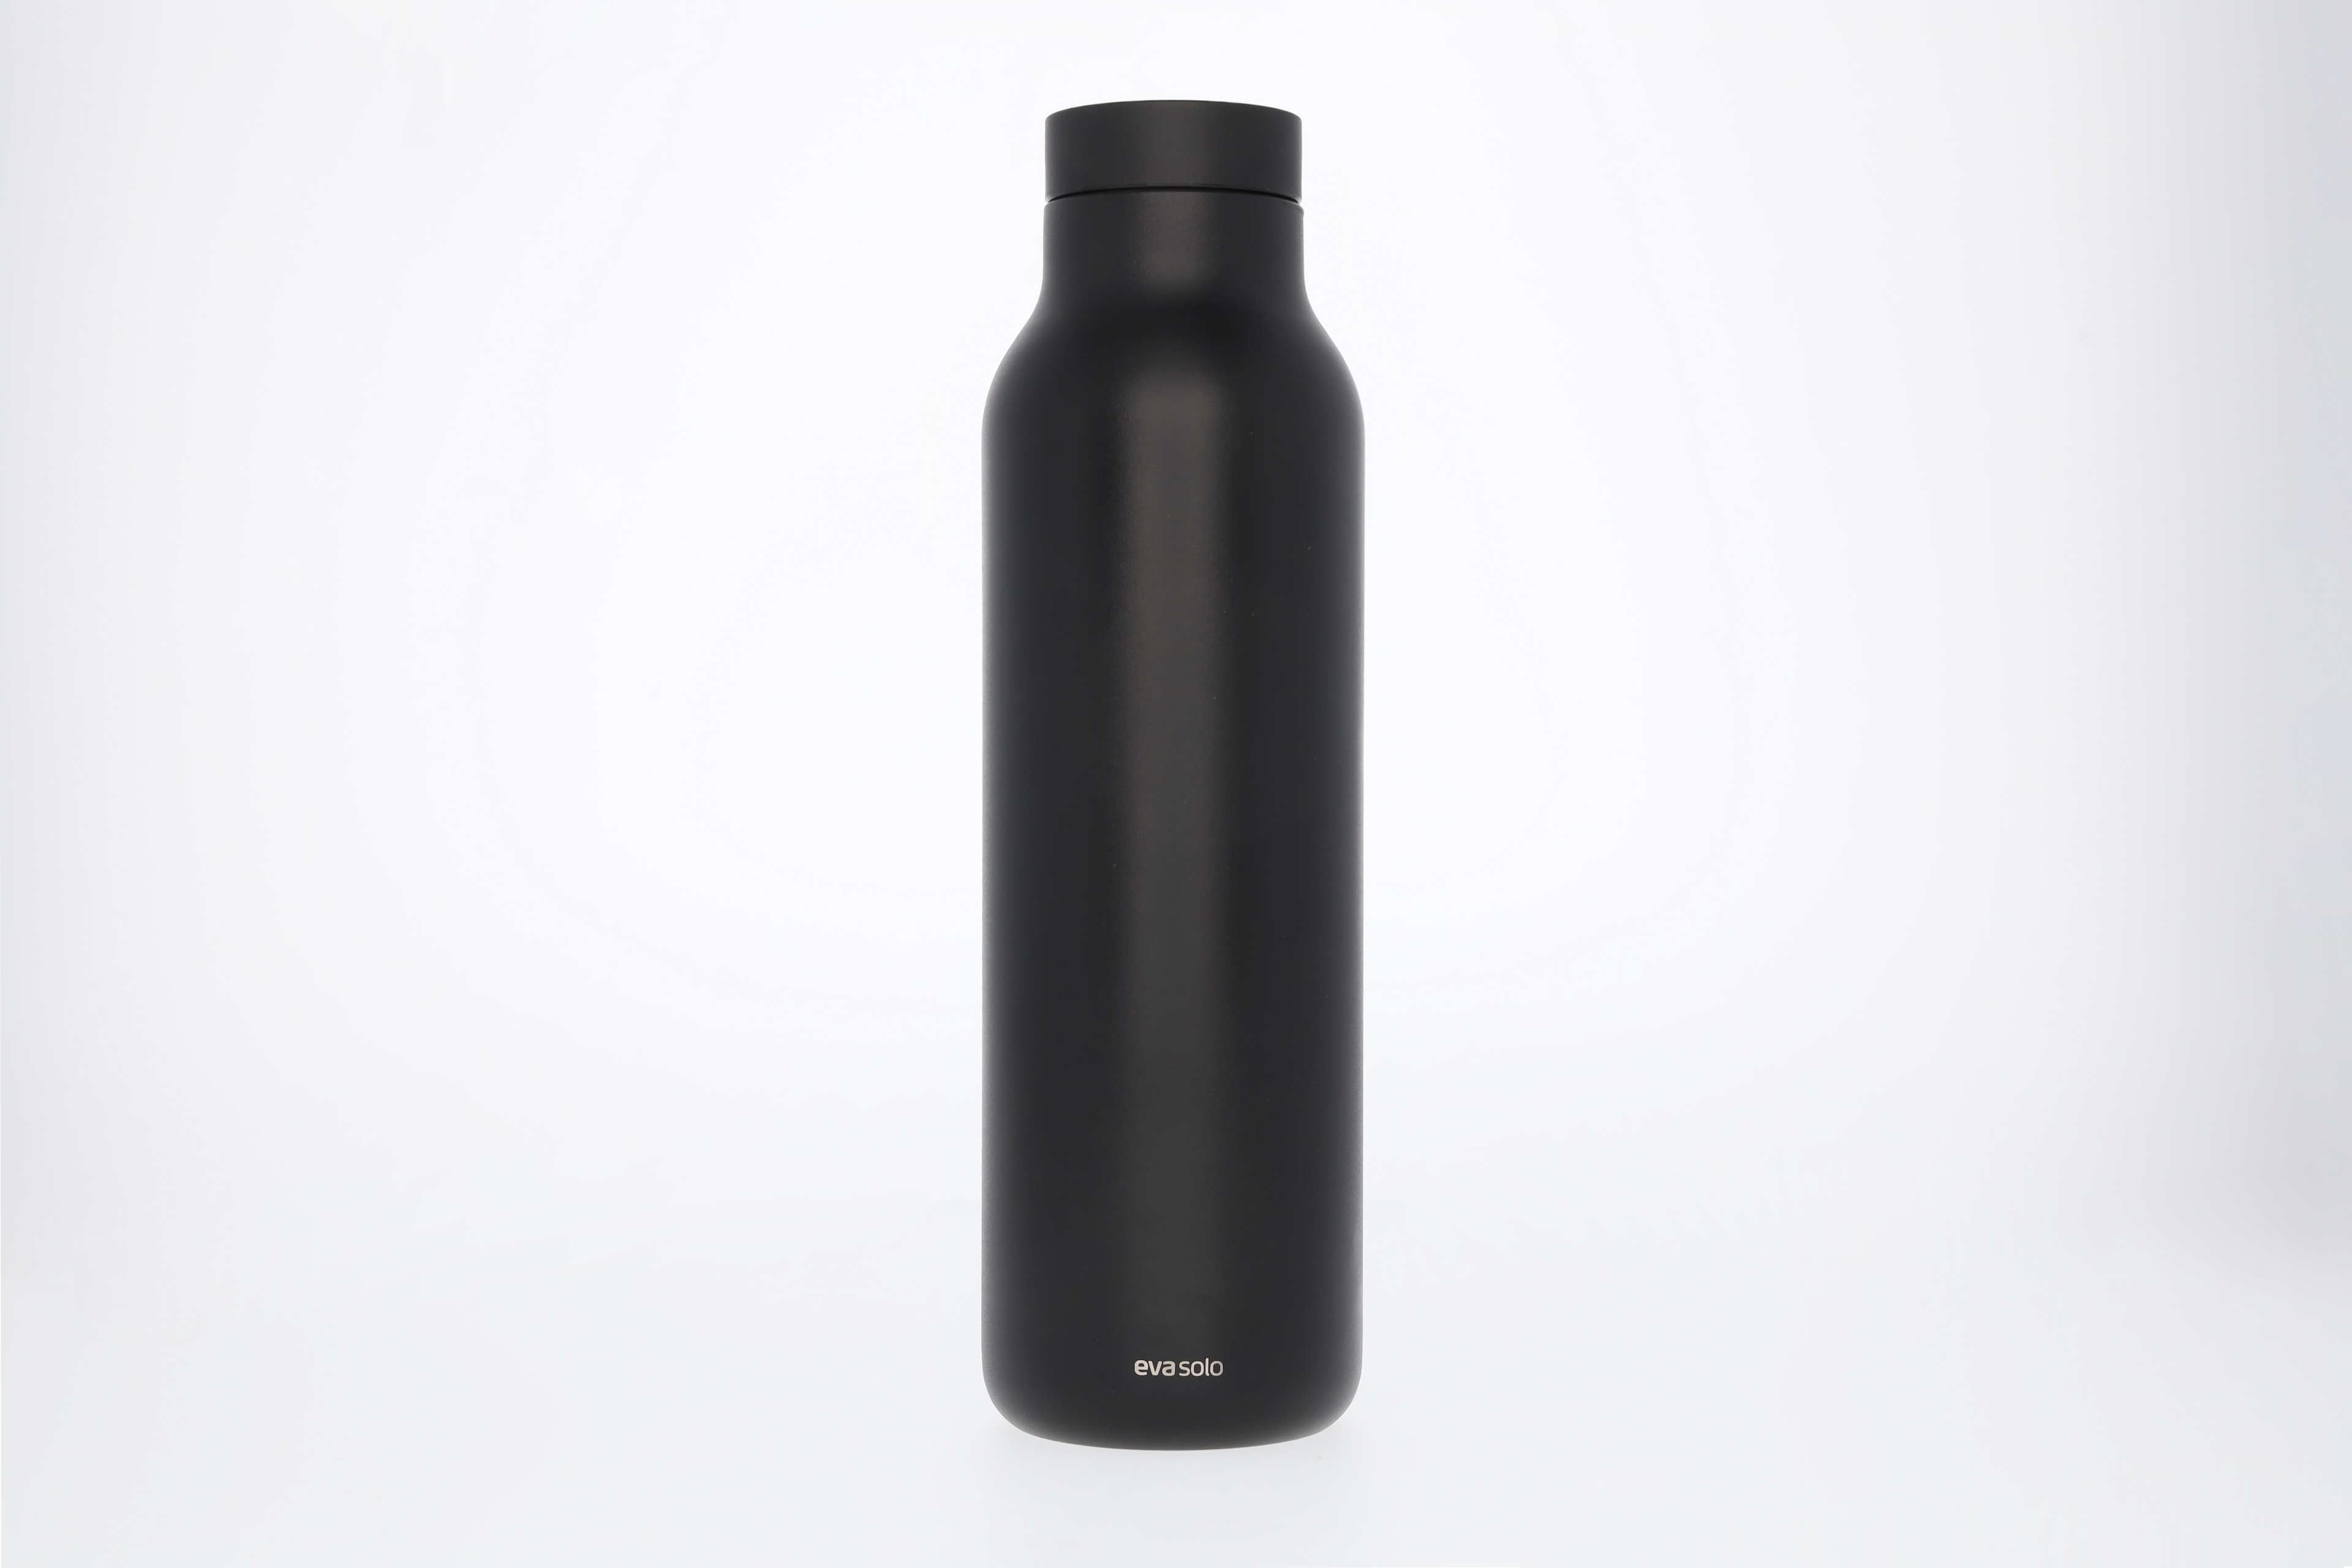 AMG Trinkflasche - schwarz, Edelstahl / Polypropylen, 700 ml, eva solo